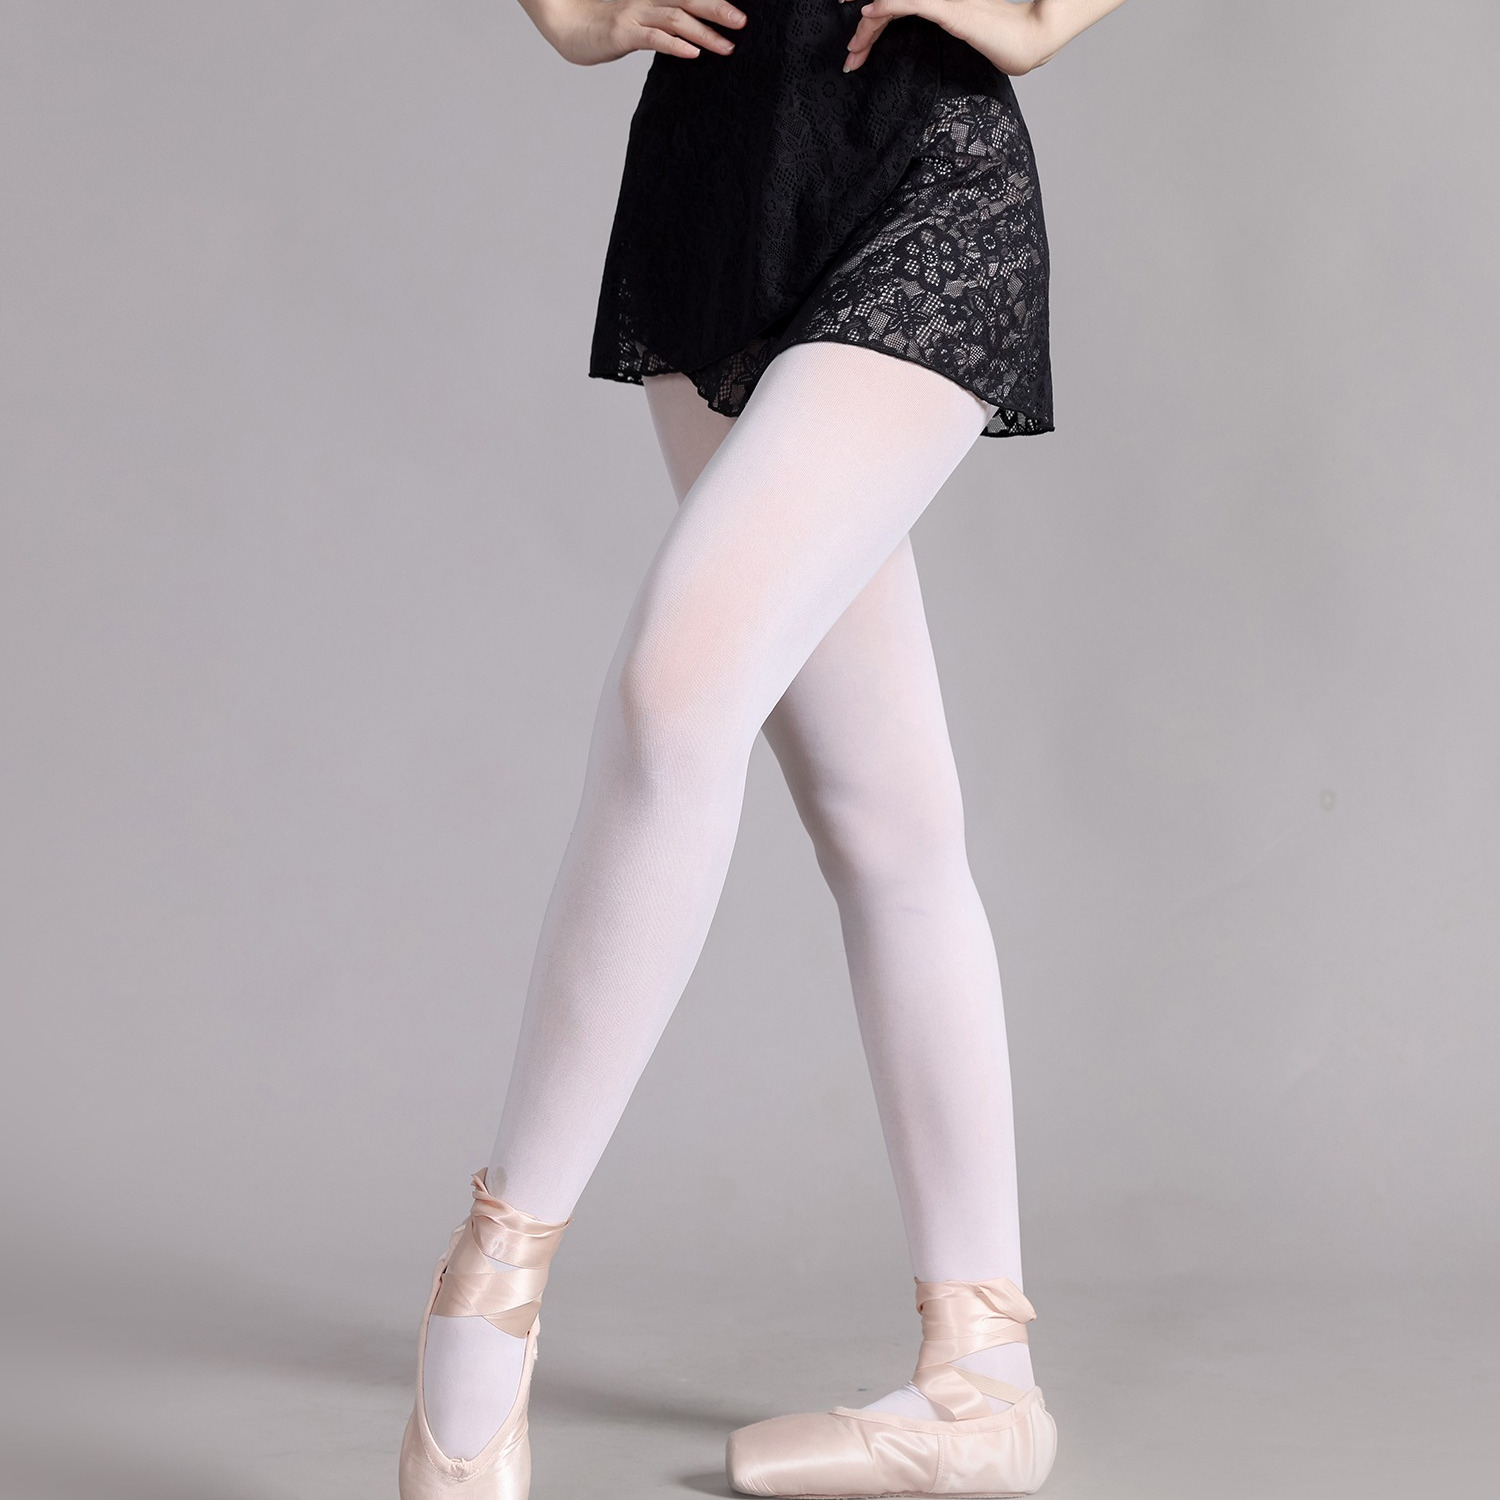 Elegant Black Ballet Wrap Skirts Womens Semi Sheer Lace Dance Skirt Dancewear Sports 